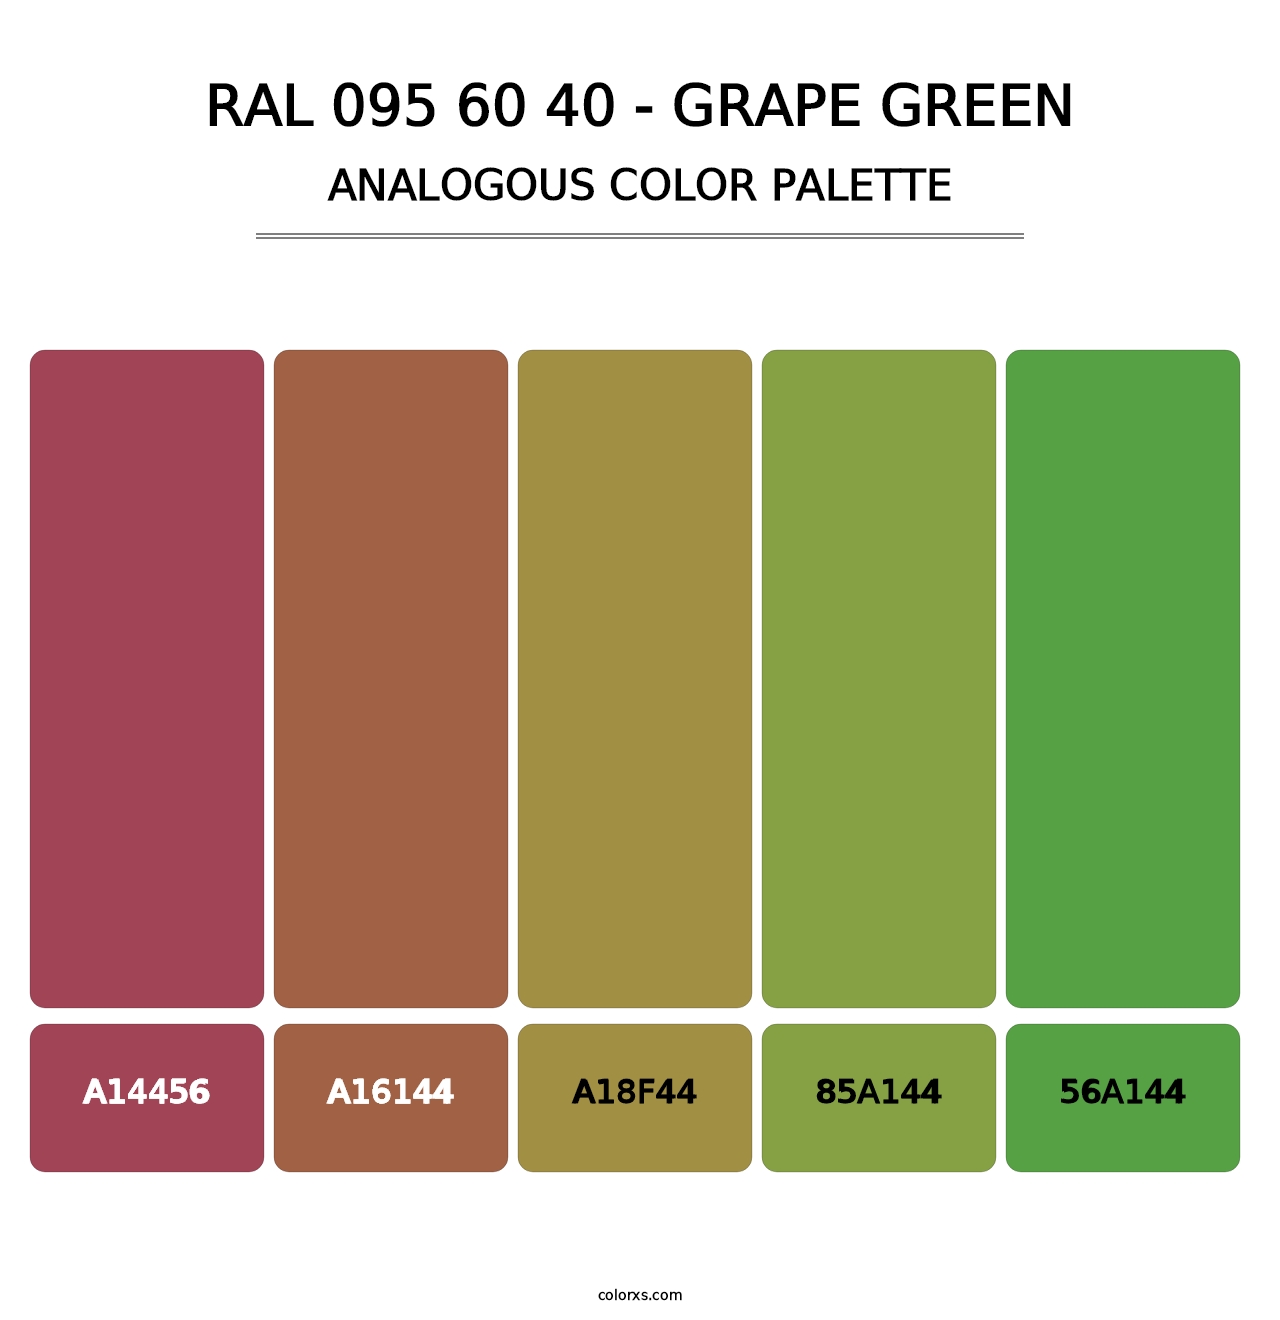 RAL 095 60 40 - Grape Green - Analogous Color Palette